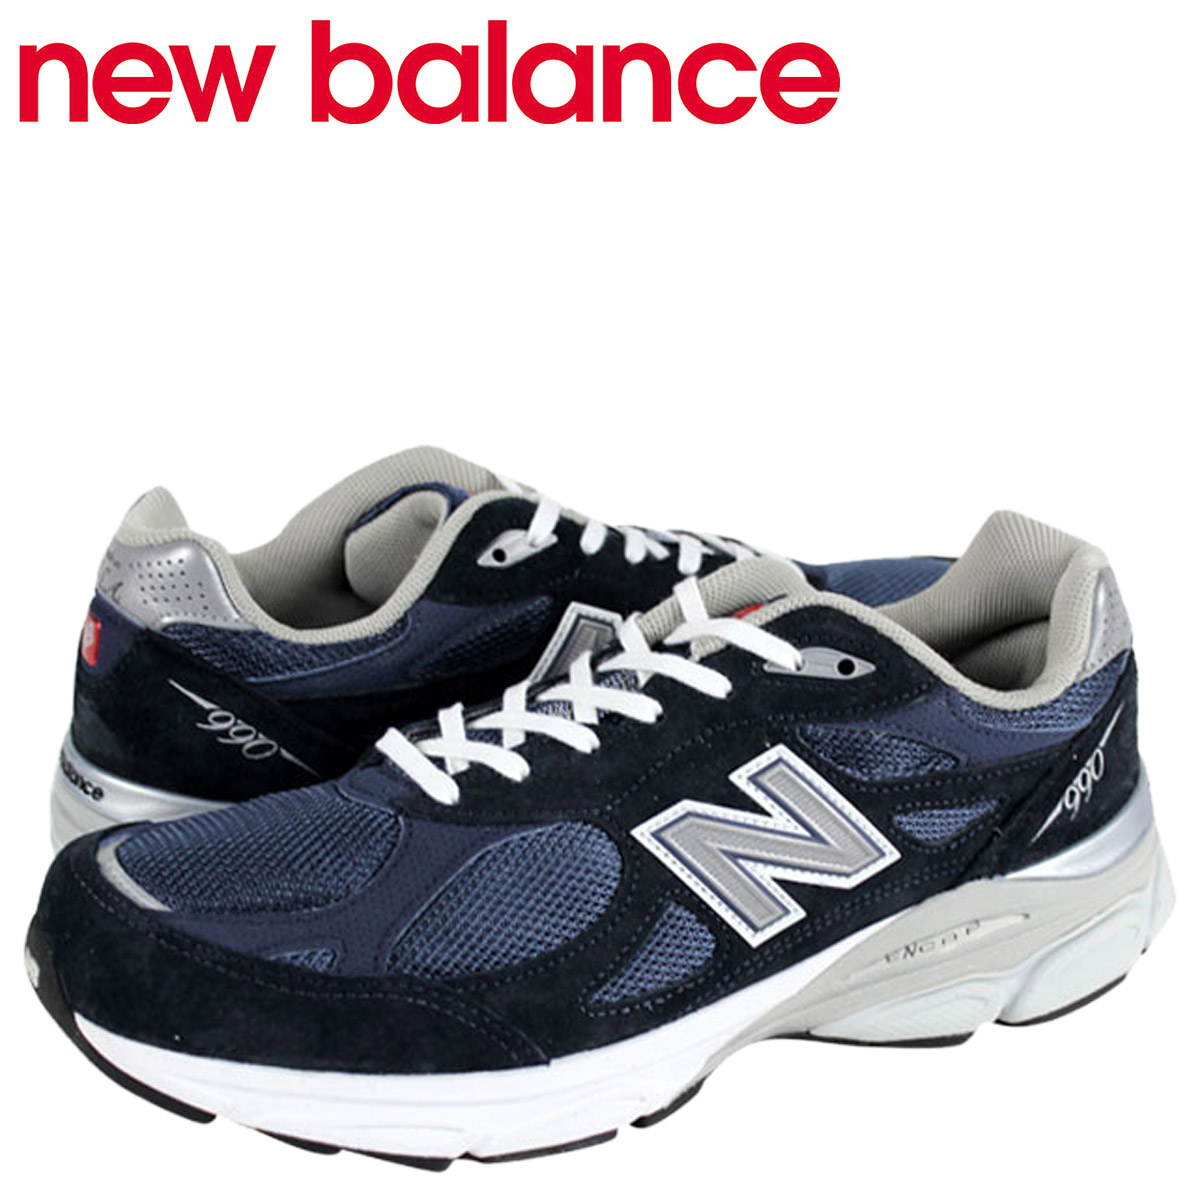 new balance 990 tennis shoes